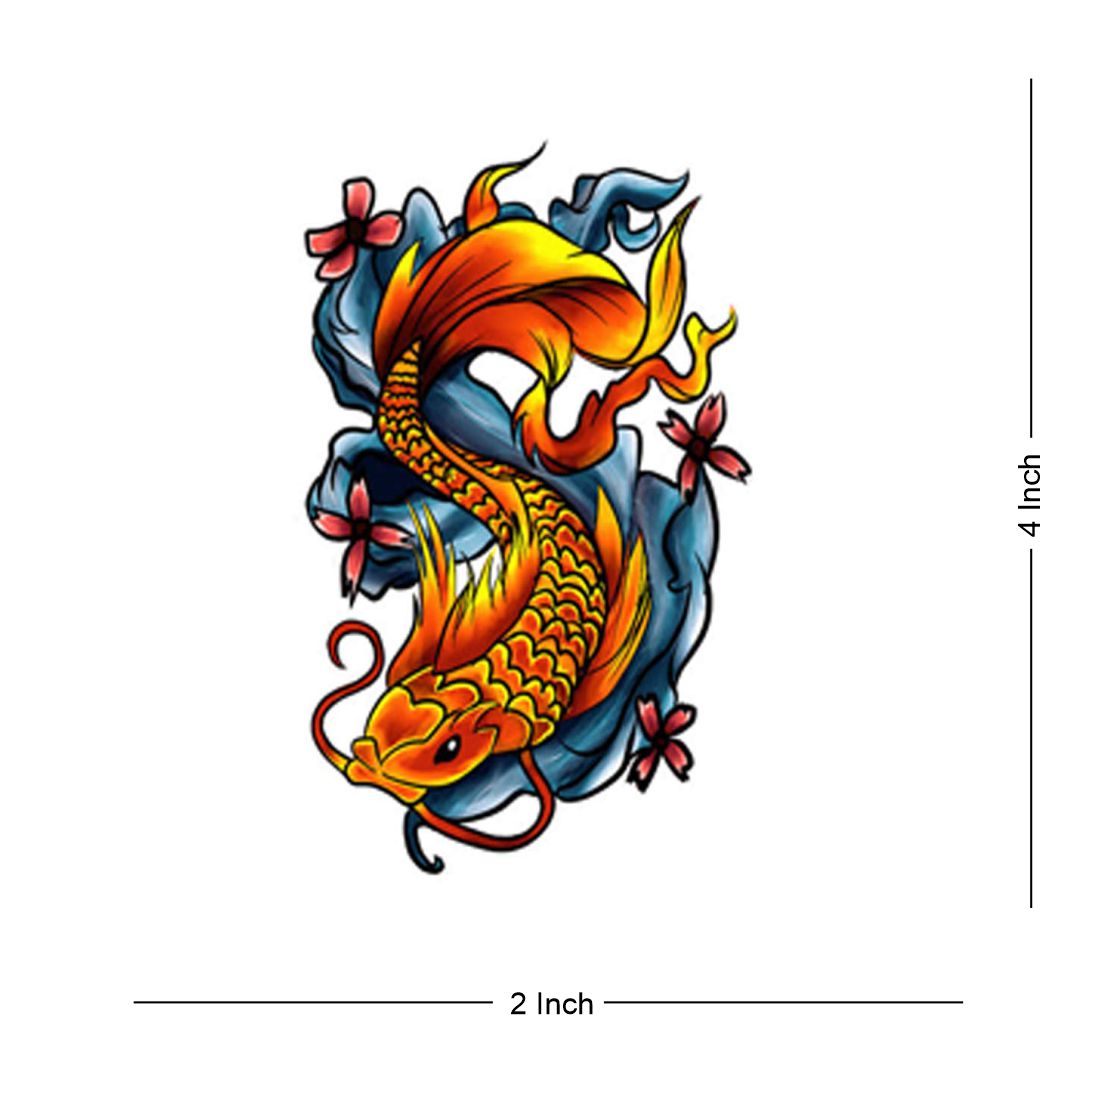 Top Dragon Tattoos Designs + Ideas (2020 Guide) - YouTube